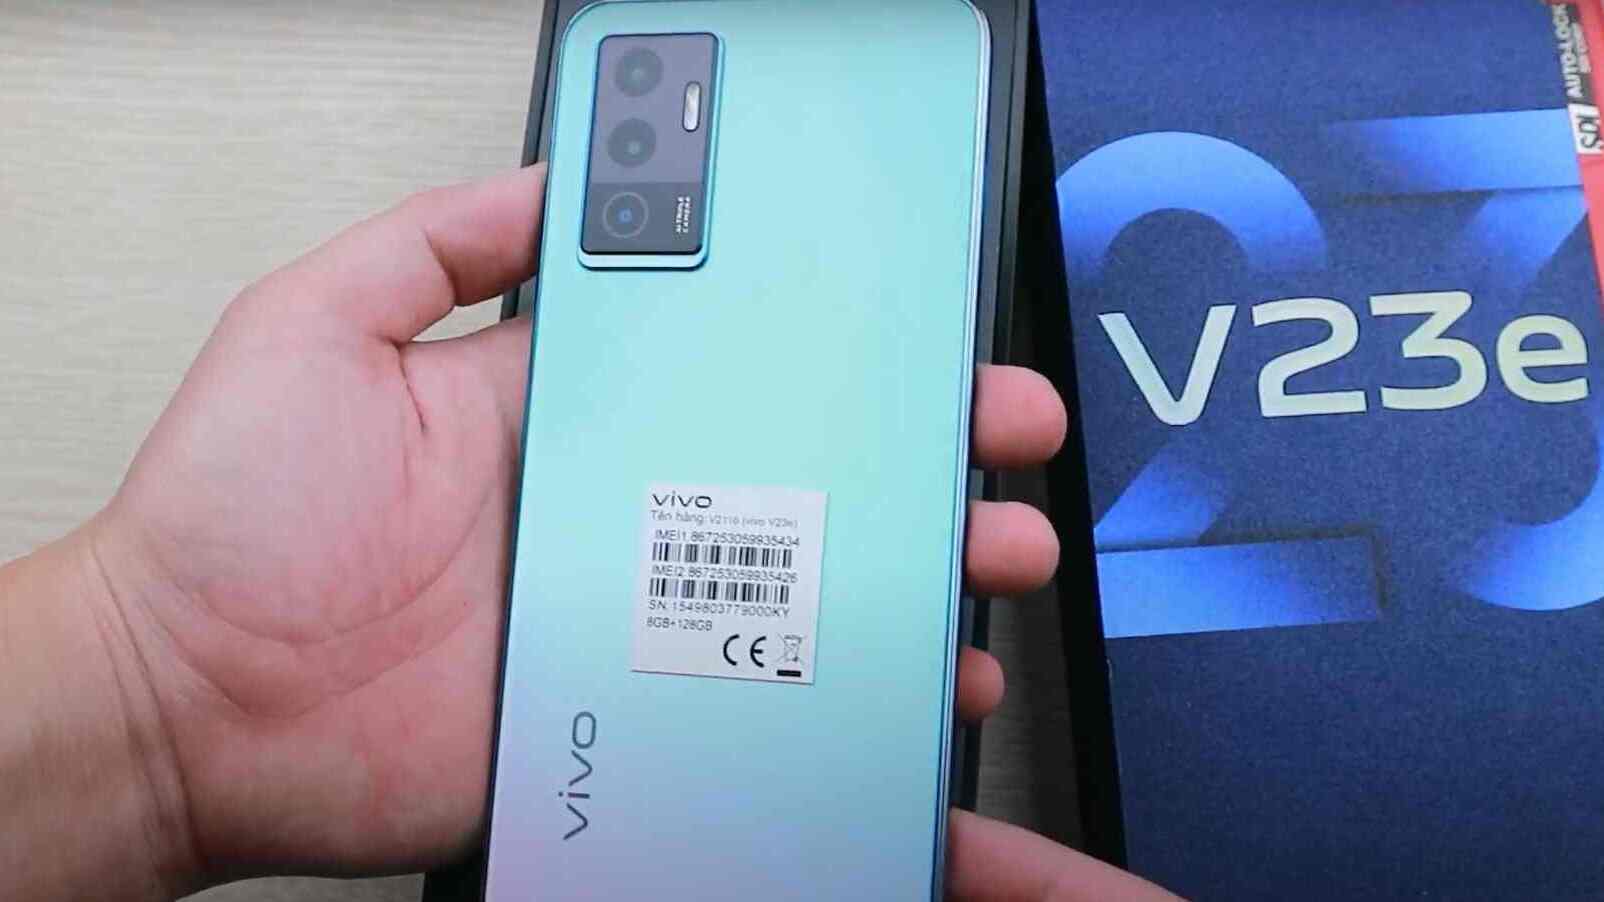 Vivo V23e spotted on Geekbench, revealed key specifications